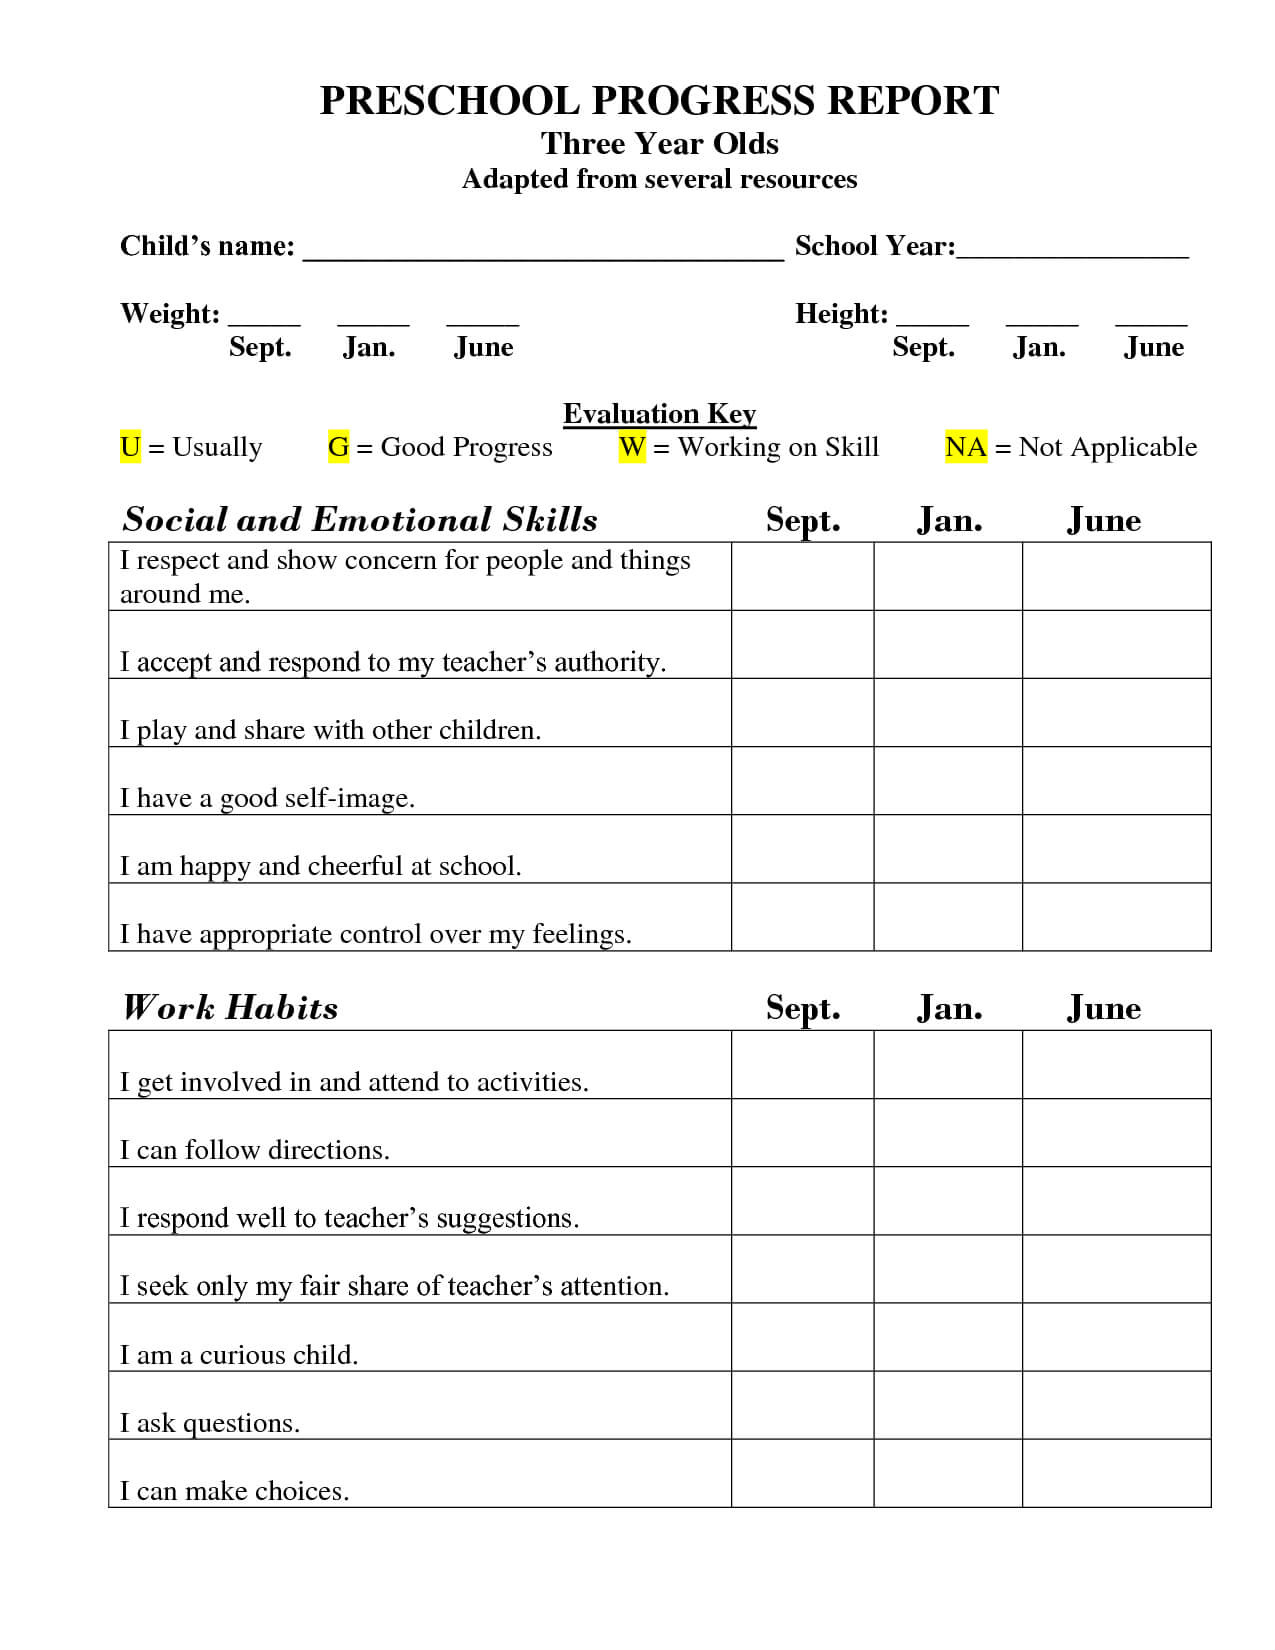 Printable Preschool Progress Report Template | School Report Throughout Preschool Progress Report Template